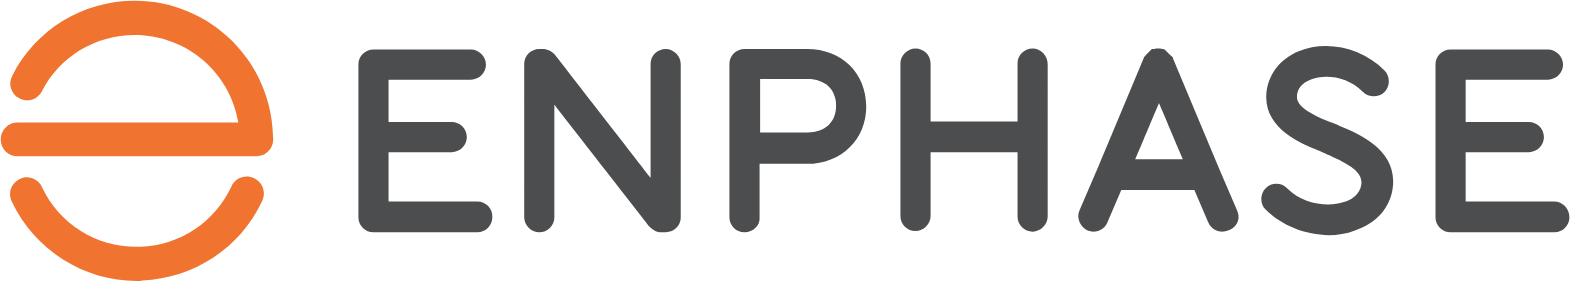 Enphase Energy
 logo large (transparent PNG)